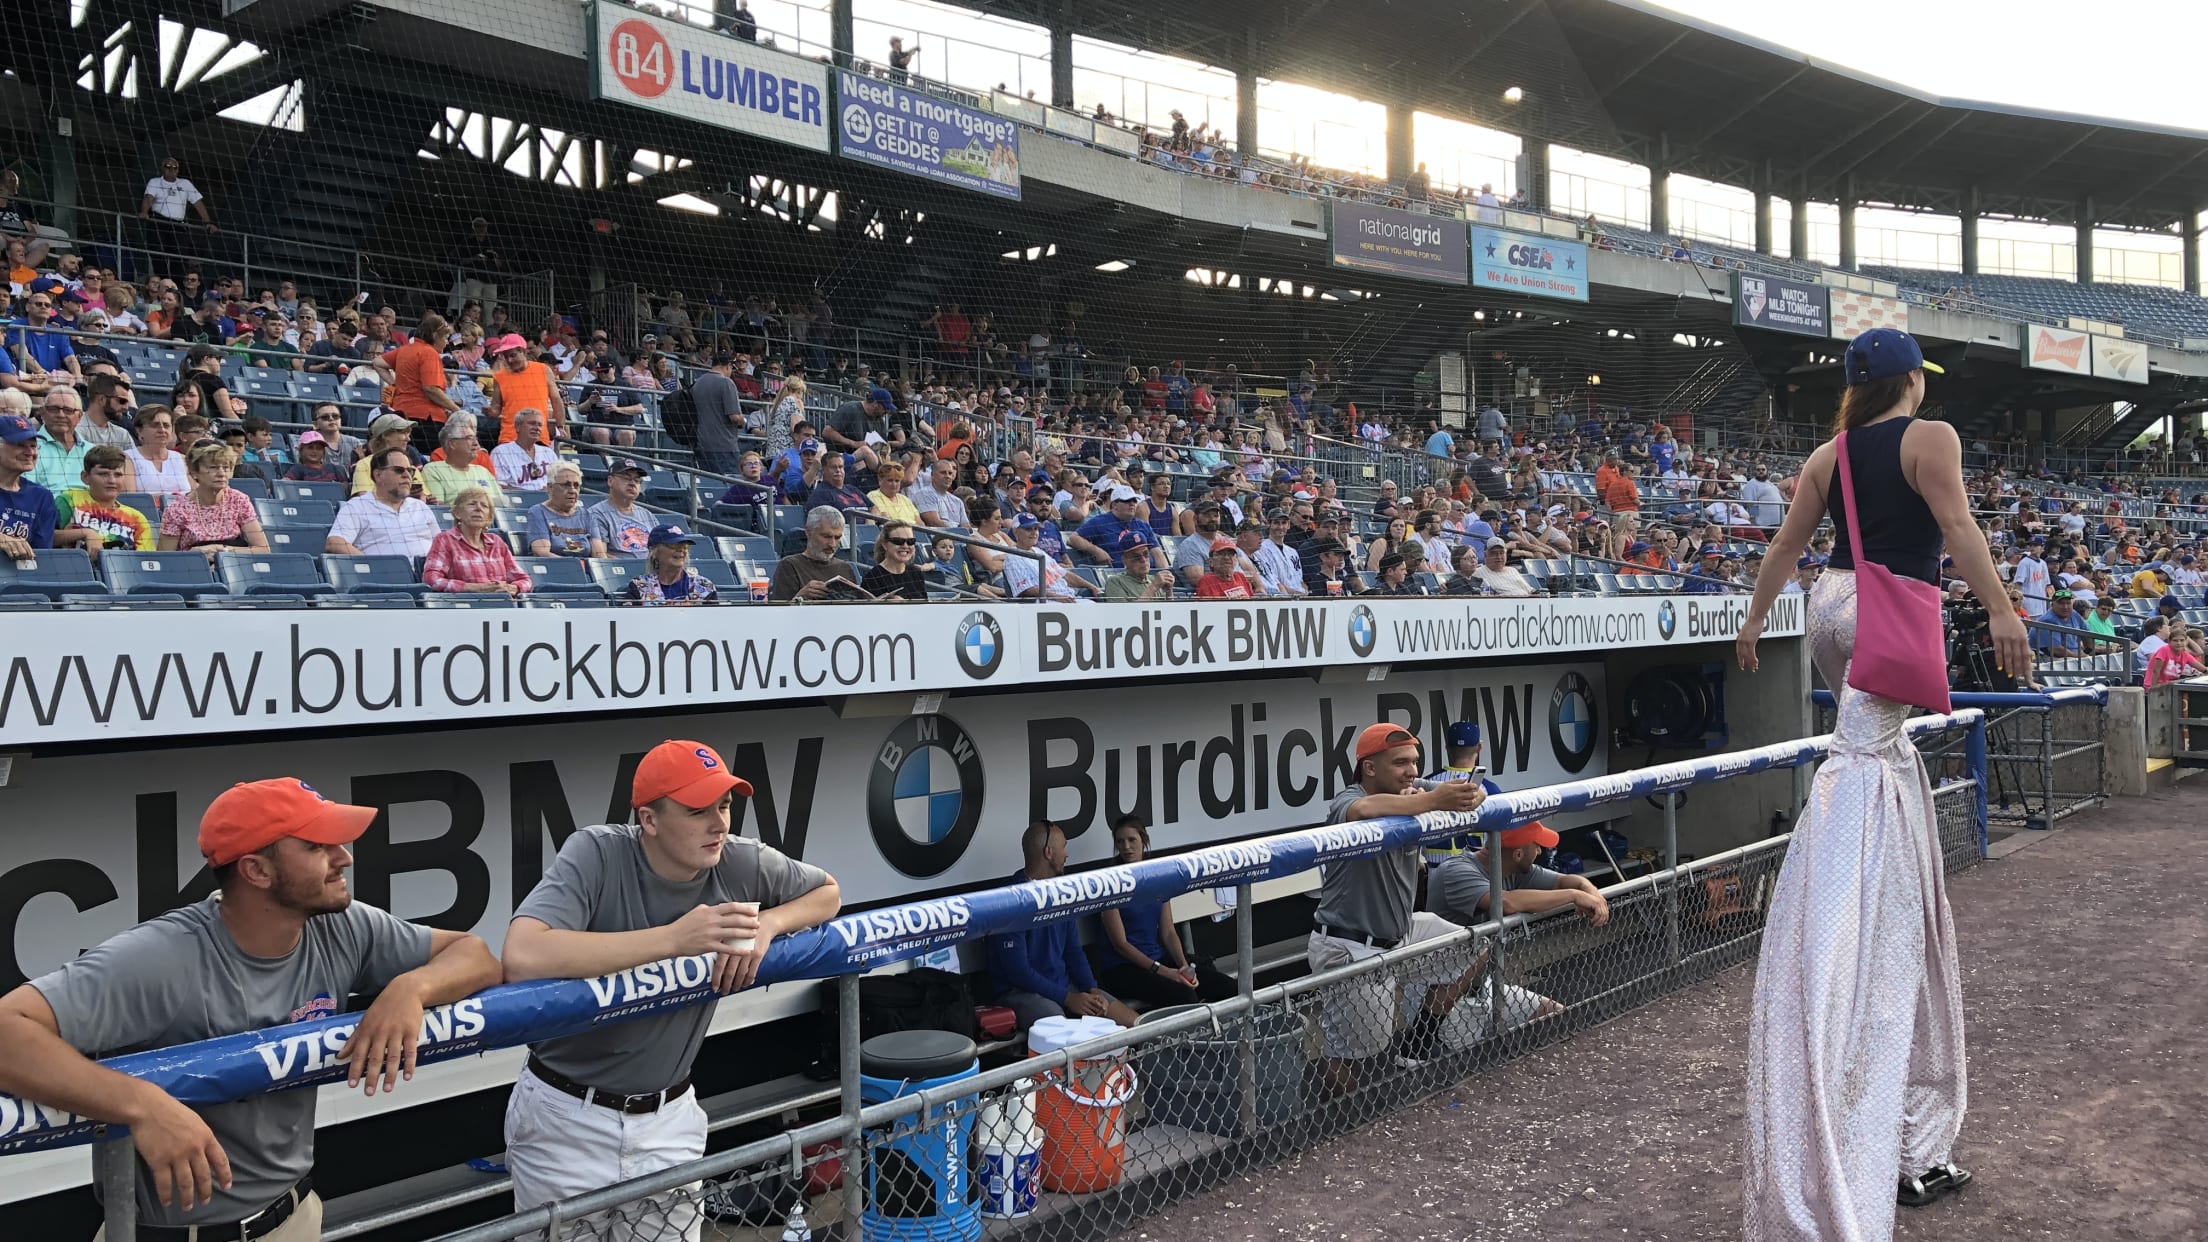 Visit NBT Bank Stadium, home of the Syracuse Mets